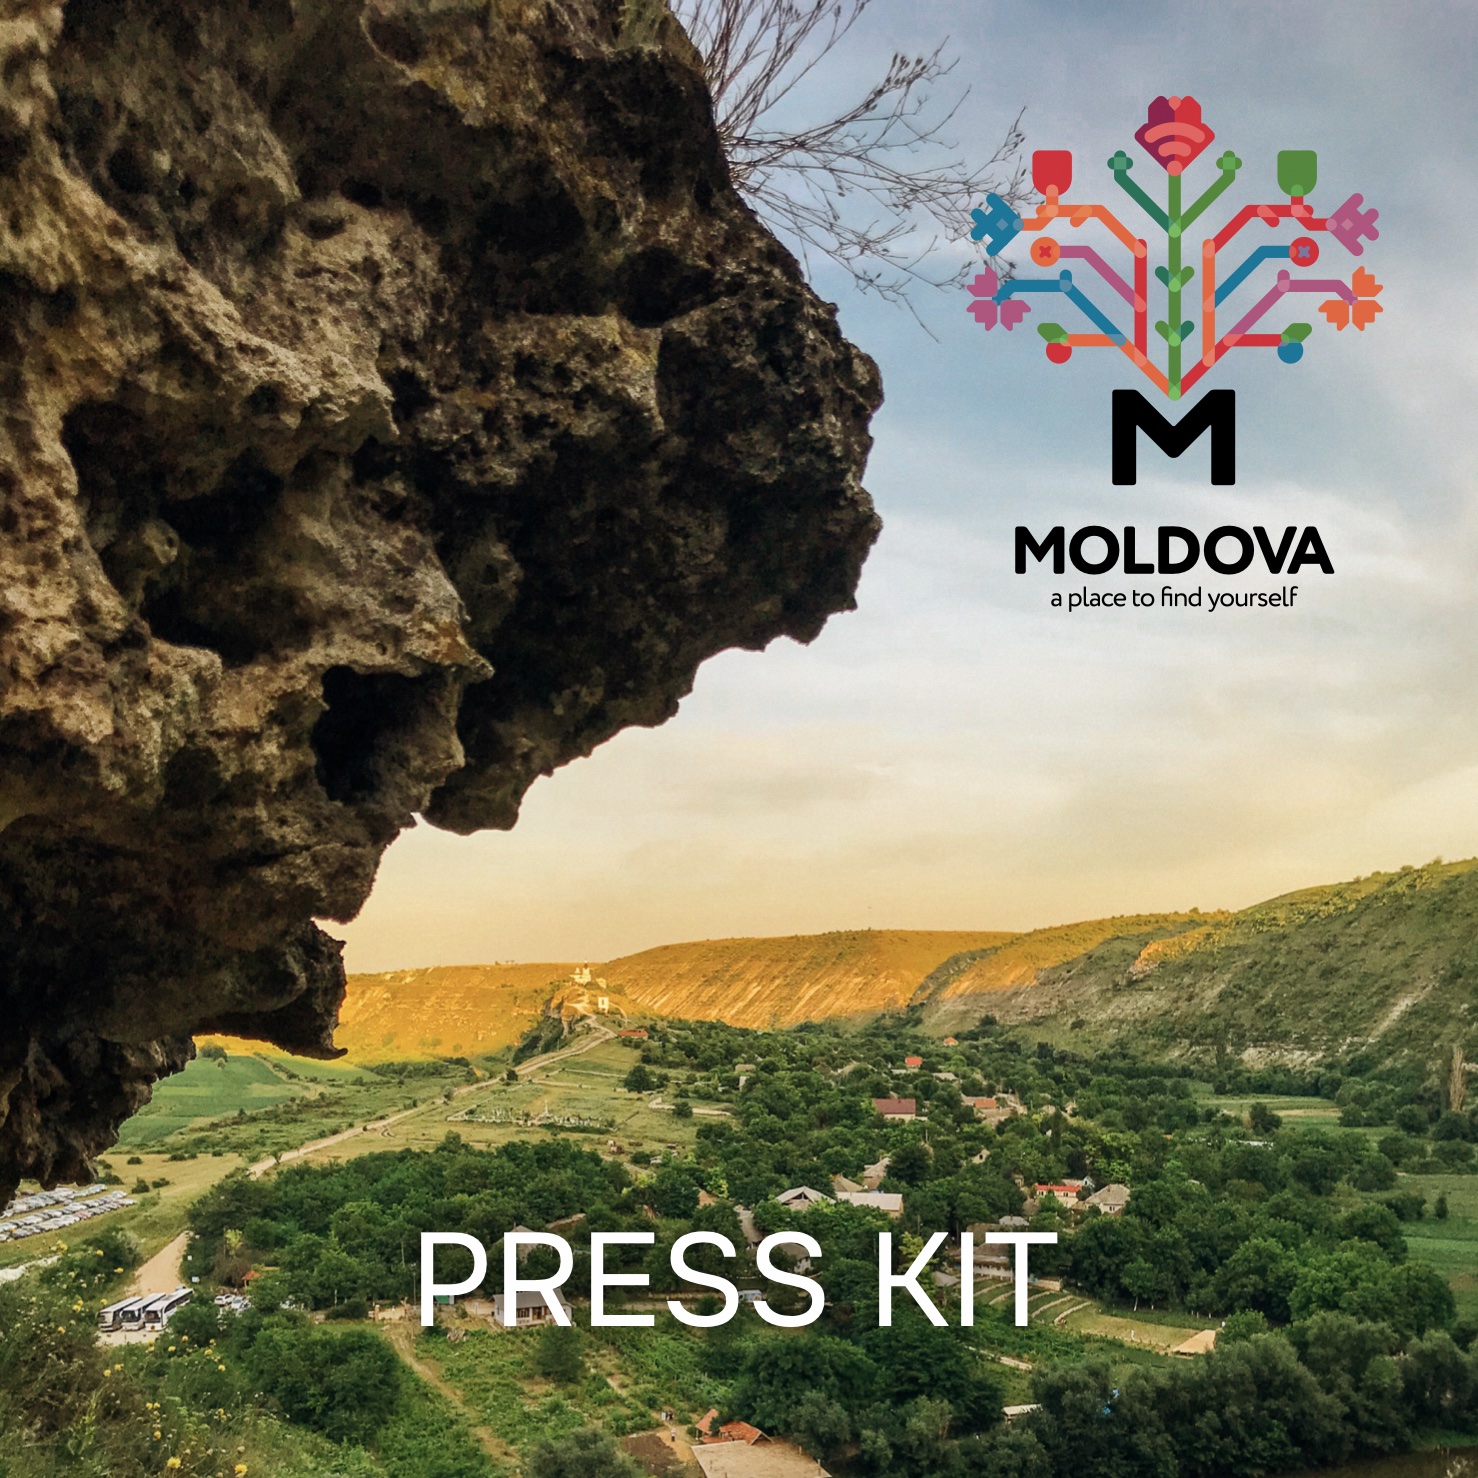 moldova tourism board